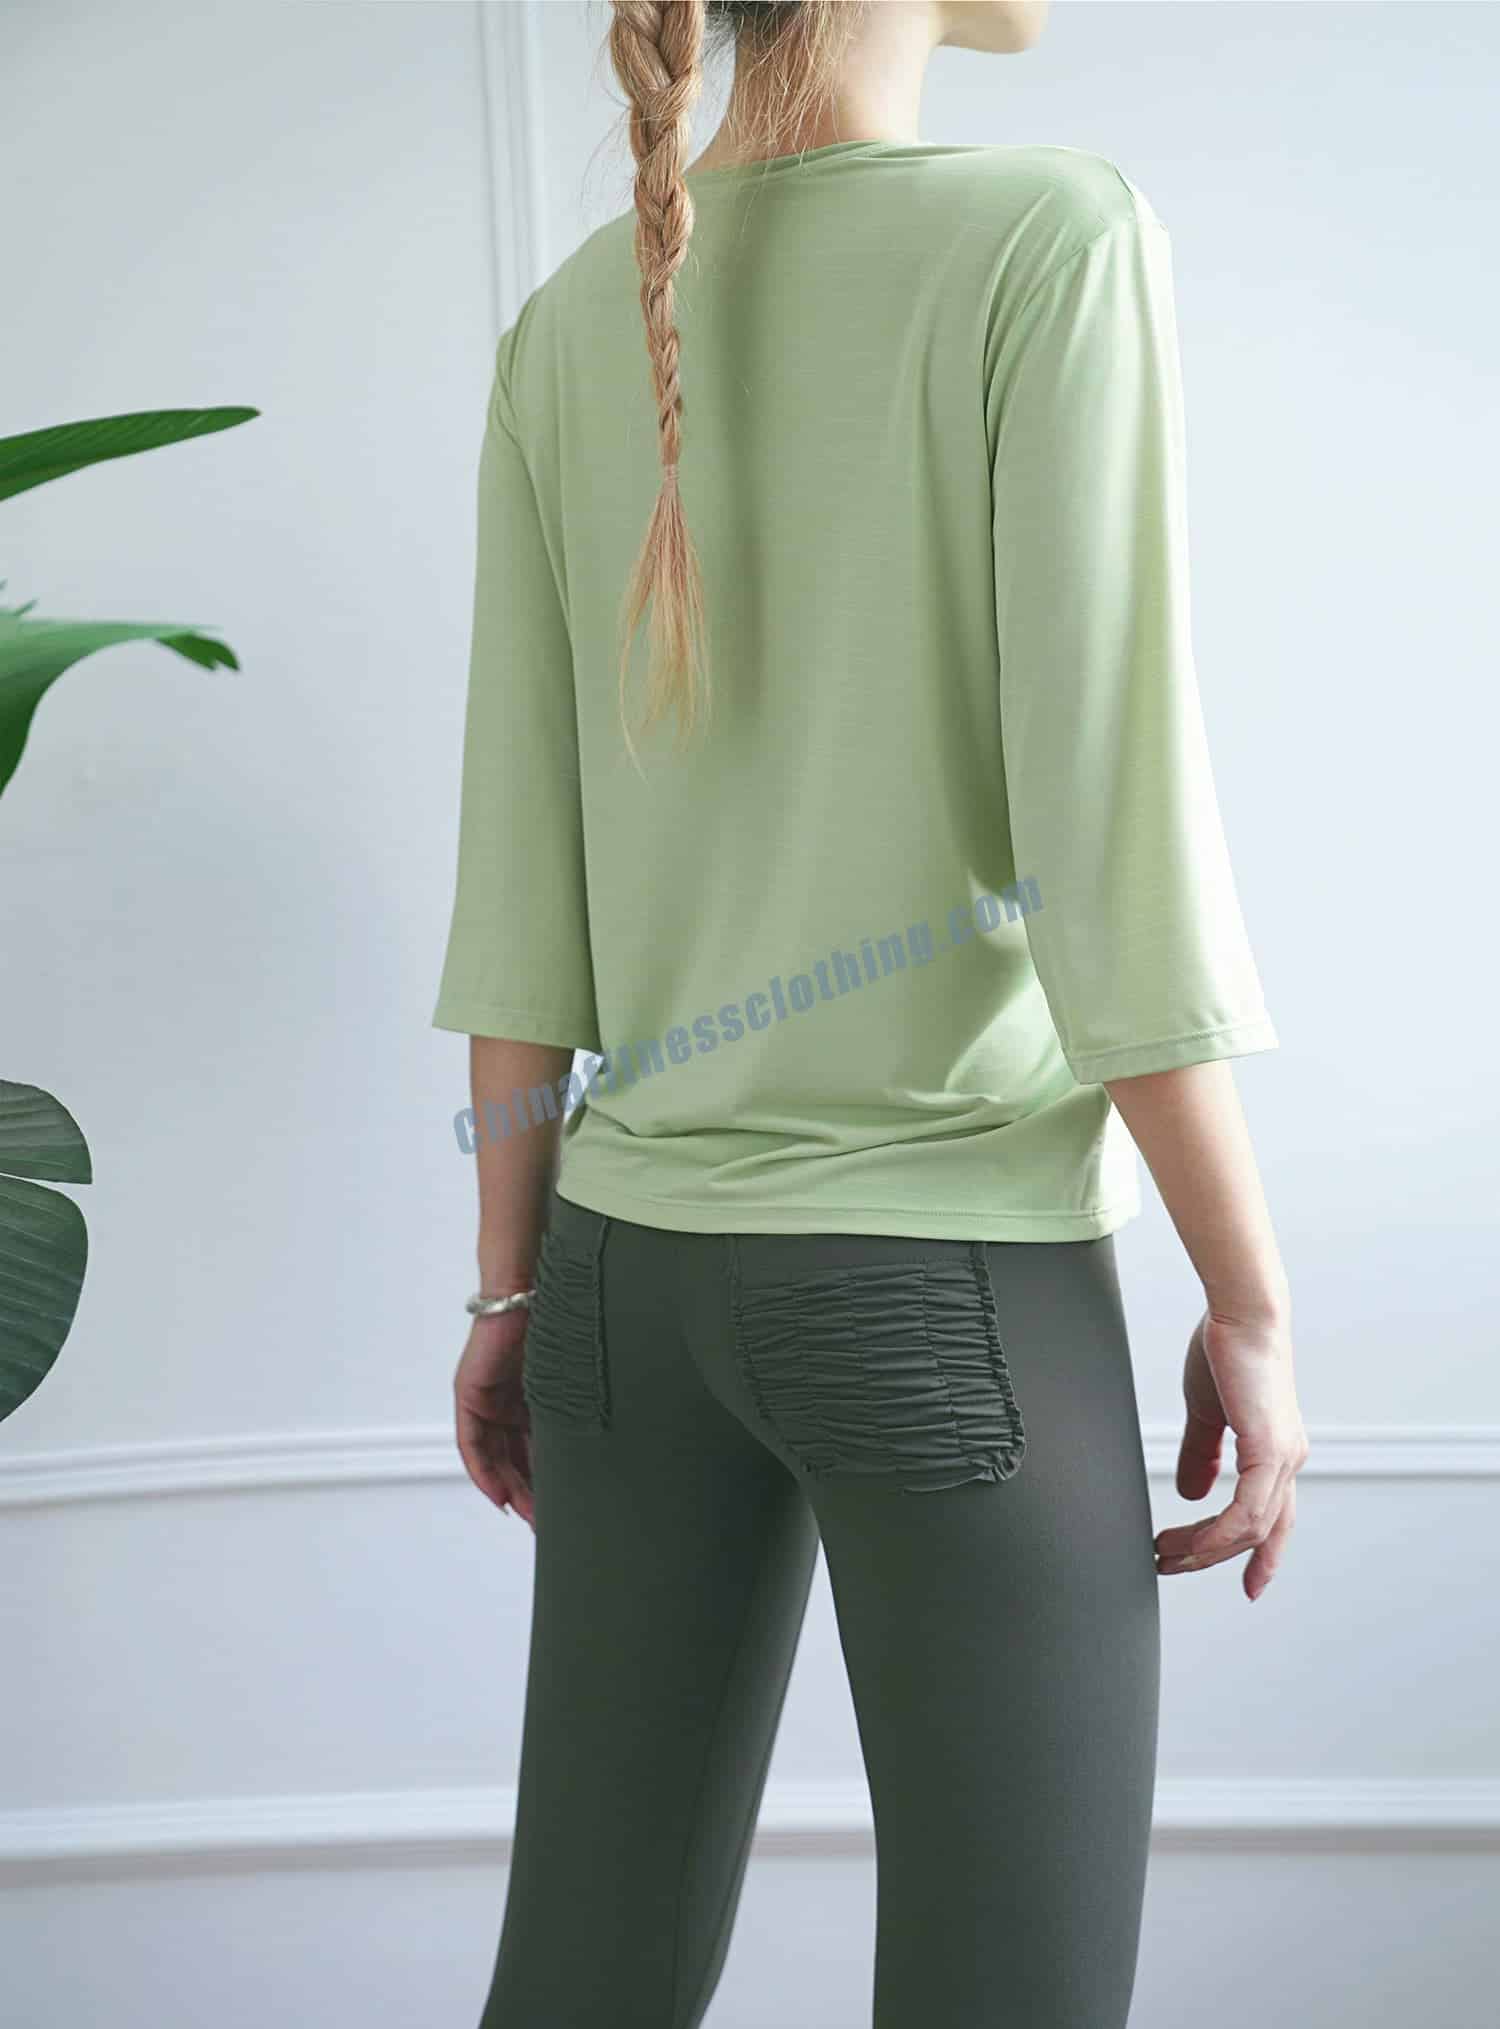 Womens plus size yoga t-shirts light green color